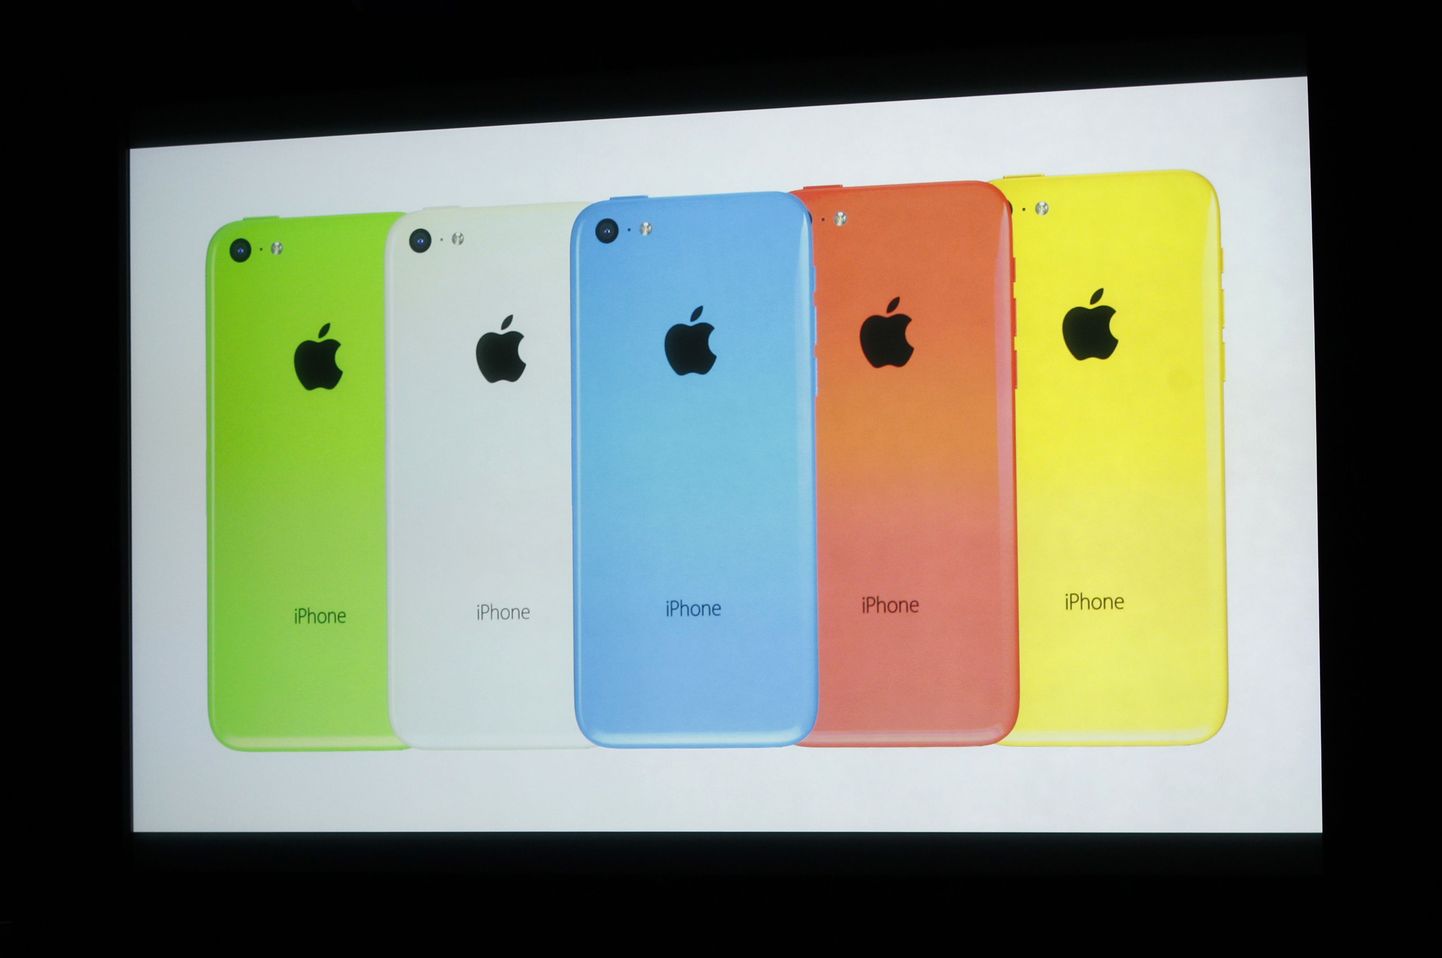 Apple iPhone 5C. Снимок иллюстративный